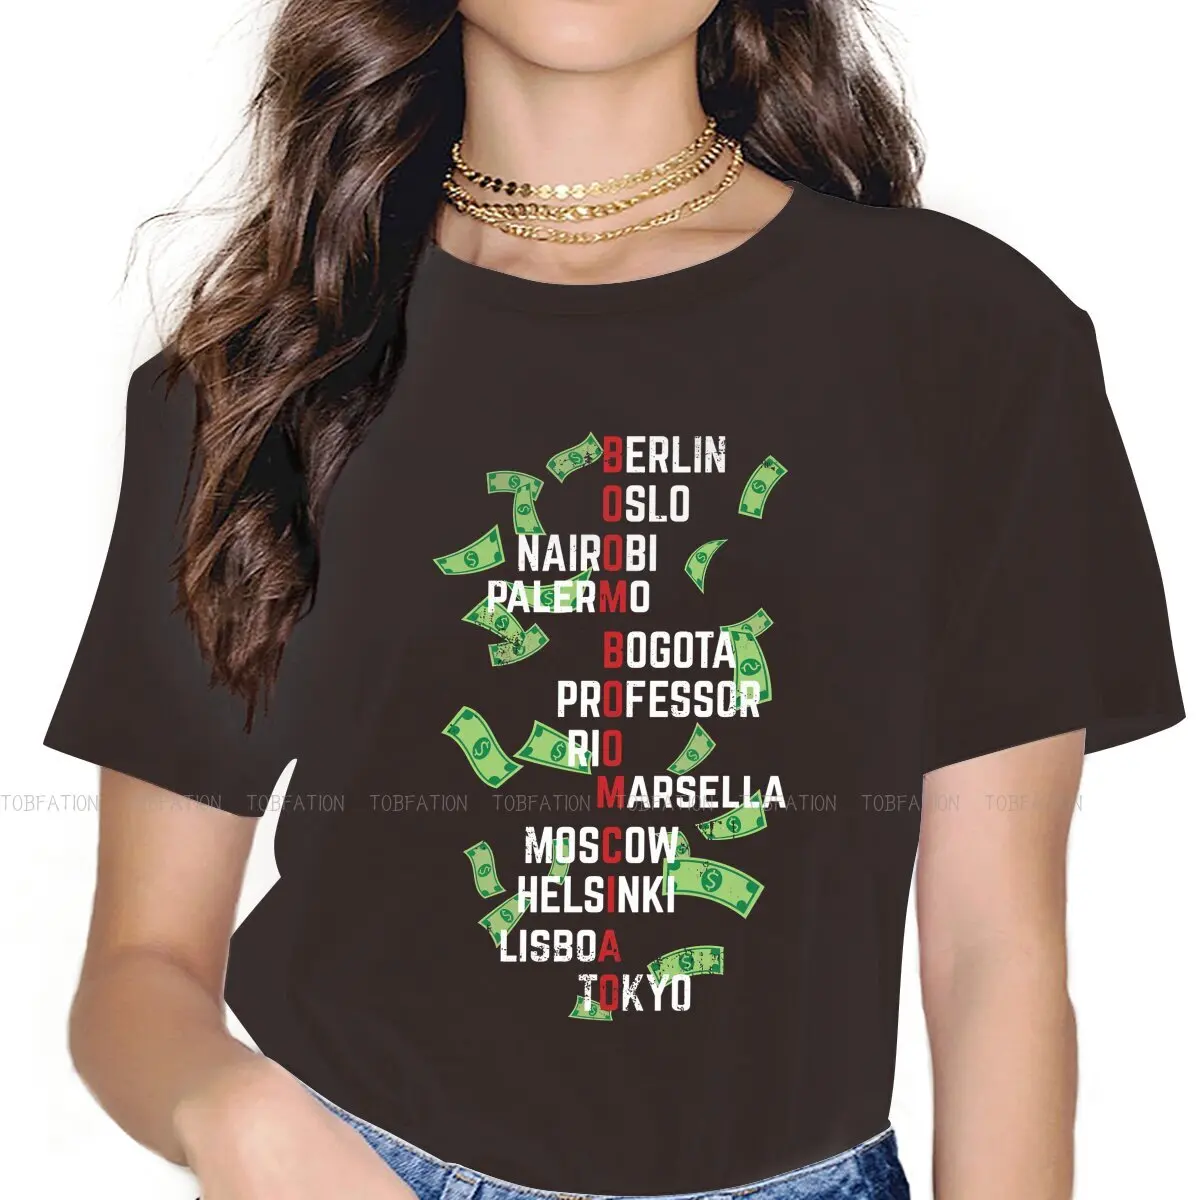 

Boom Ciao O Neck TShirt Money Heist La Casa De Papel Tokio Raquel Murillo Fabric Original T Shirt Woman Tops 5XL Oversized